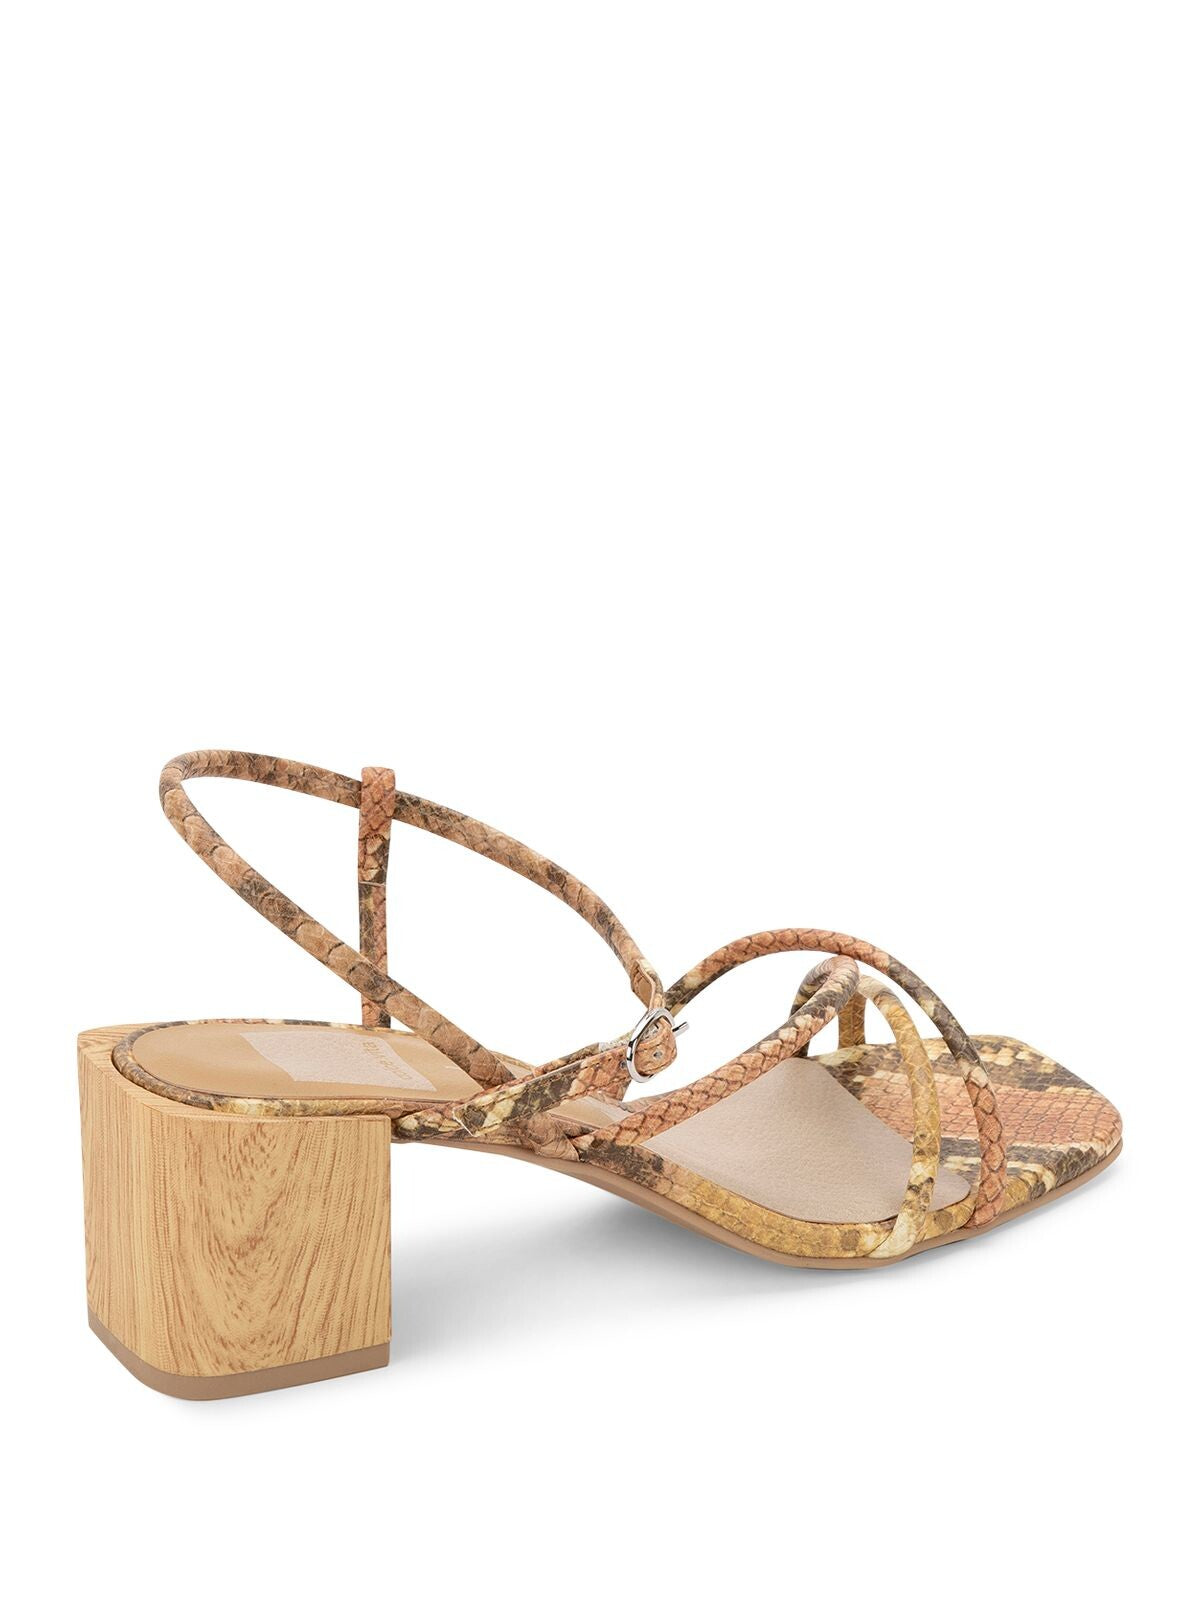 DOLCE VITA Womens Beige Wood-Like Strappy Padded Zilla Square Toe Block Heel Buckle Slingback Sandal 8 M